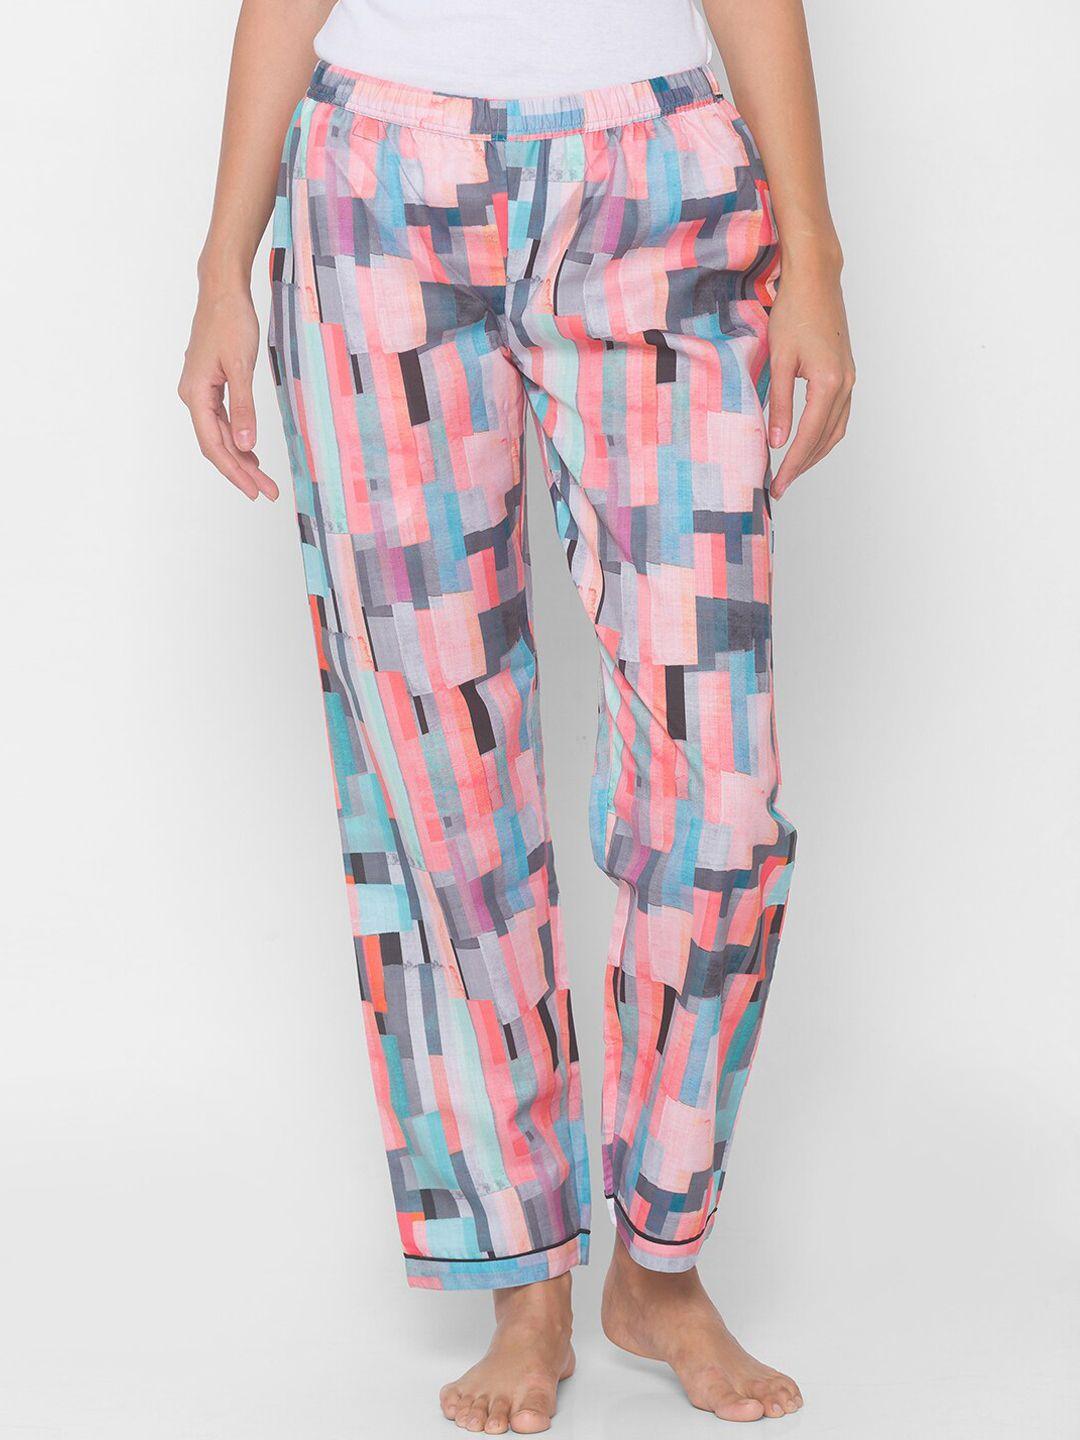 fashionrack women multicoloured abstract printed lounge pants